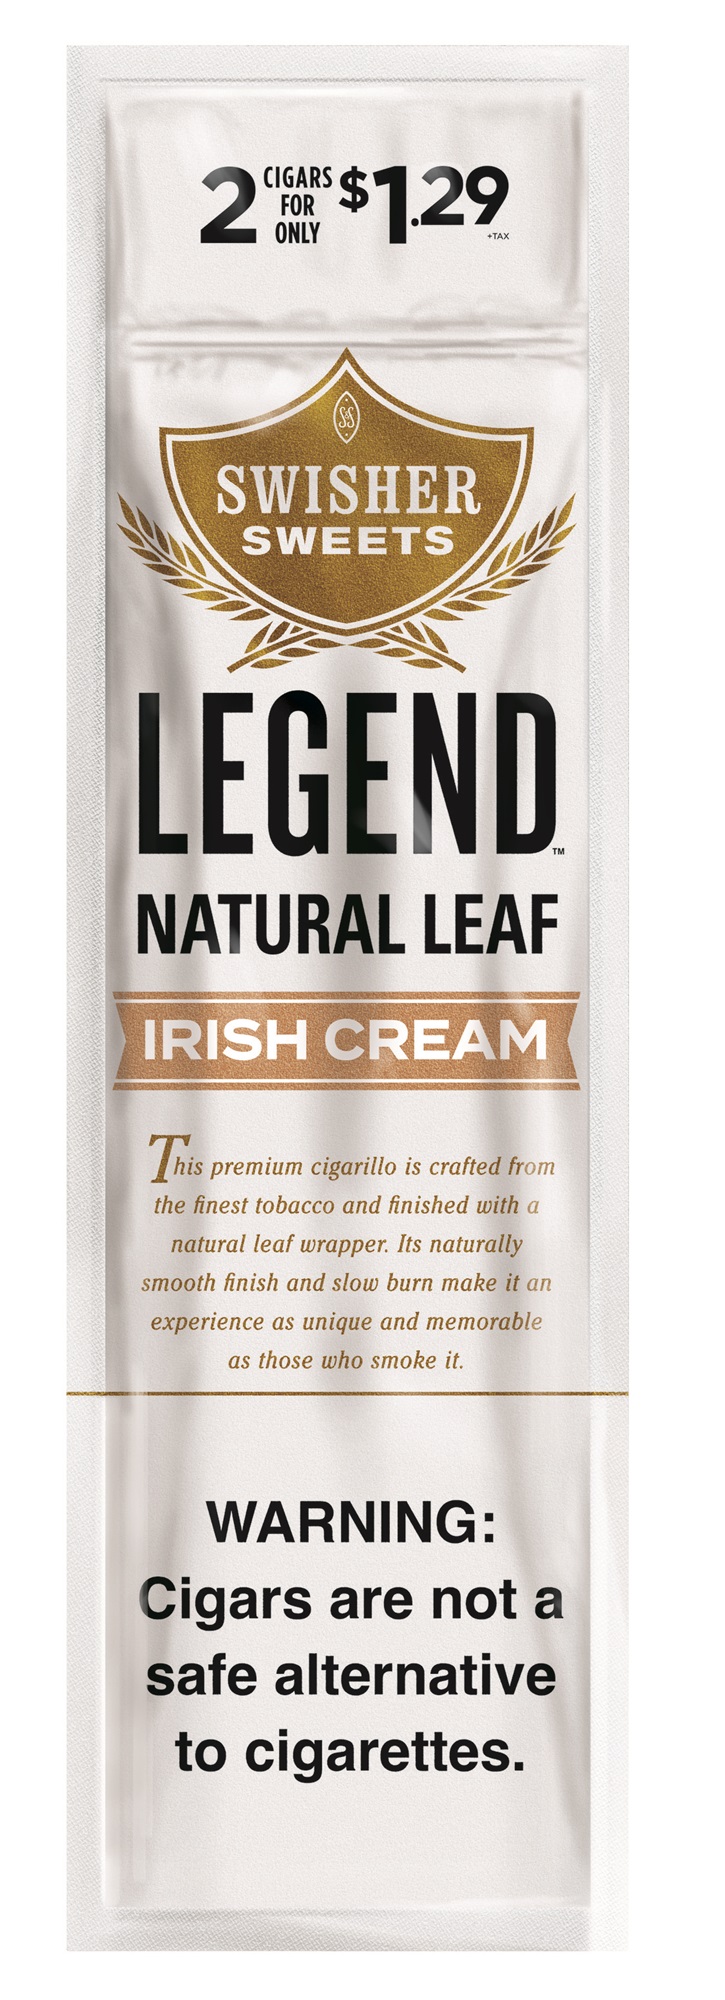 Swi swt irish cream legend 2/$1.29 30/2pk